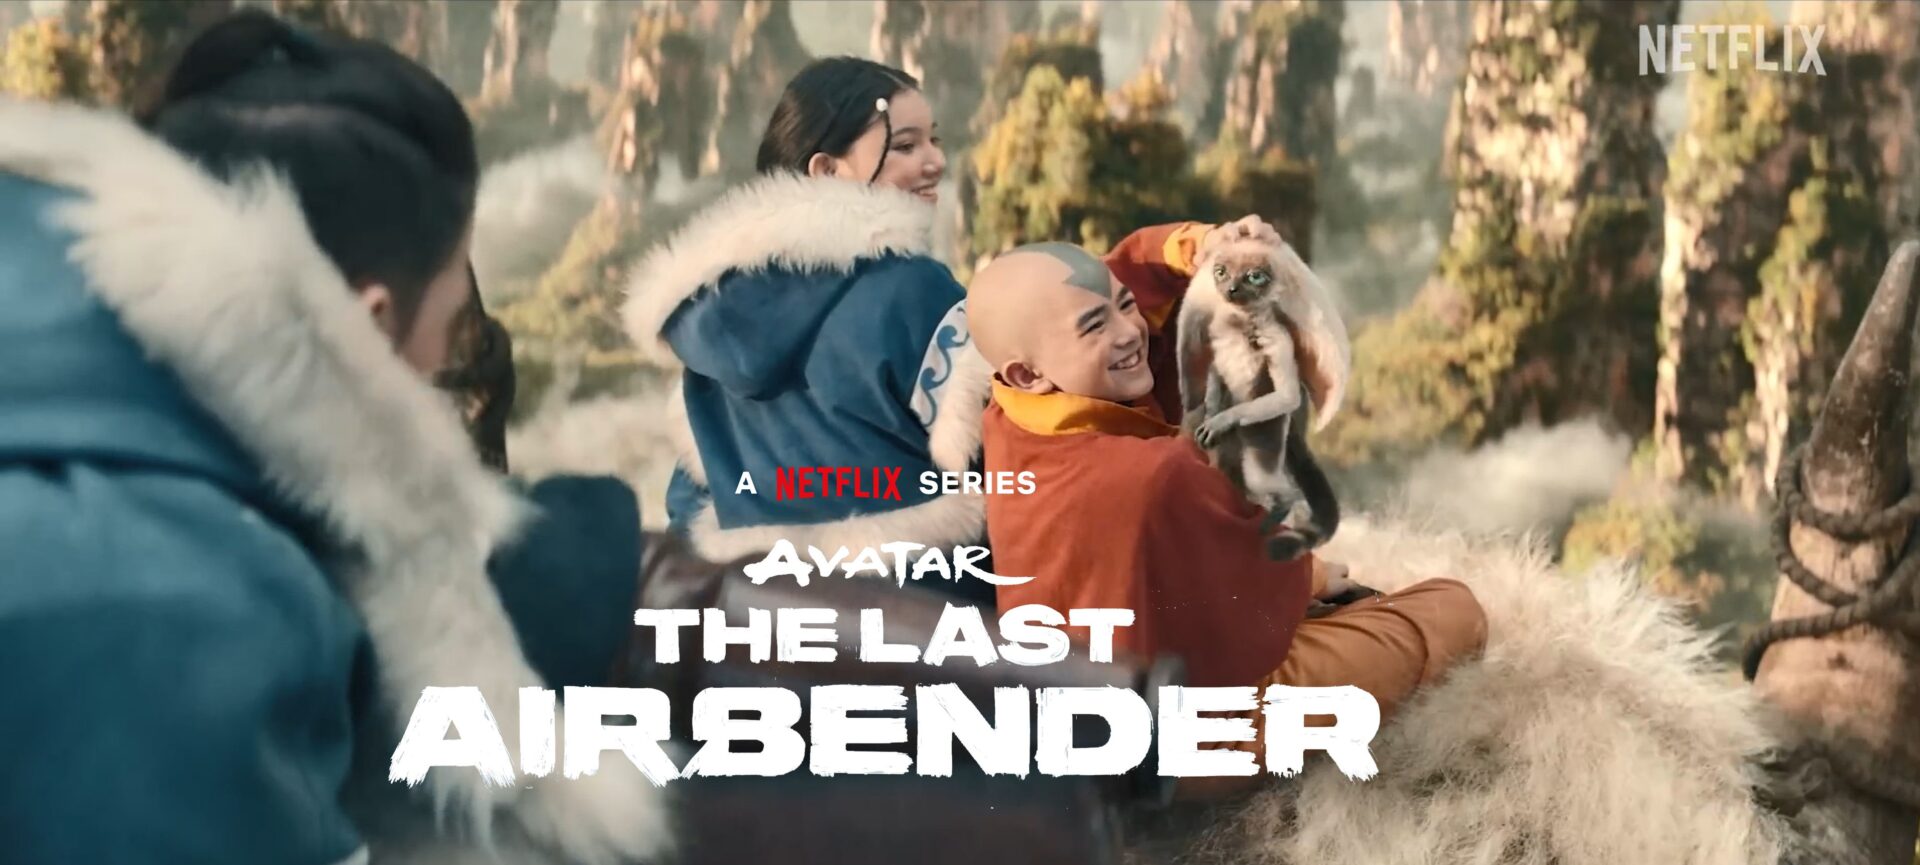 avatar the last airbender teaser trailer 2 banner